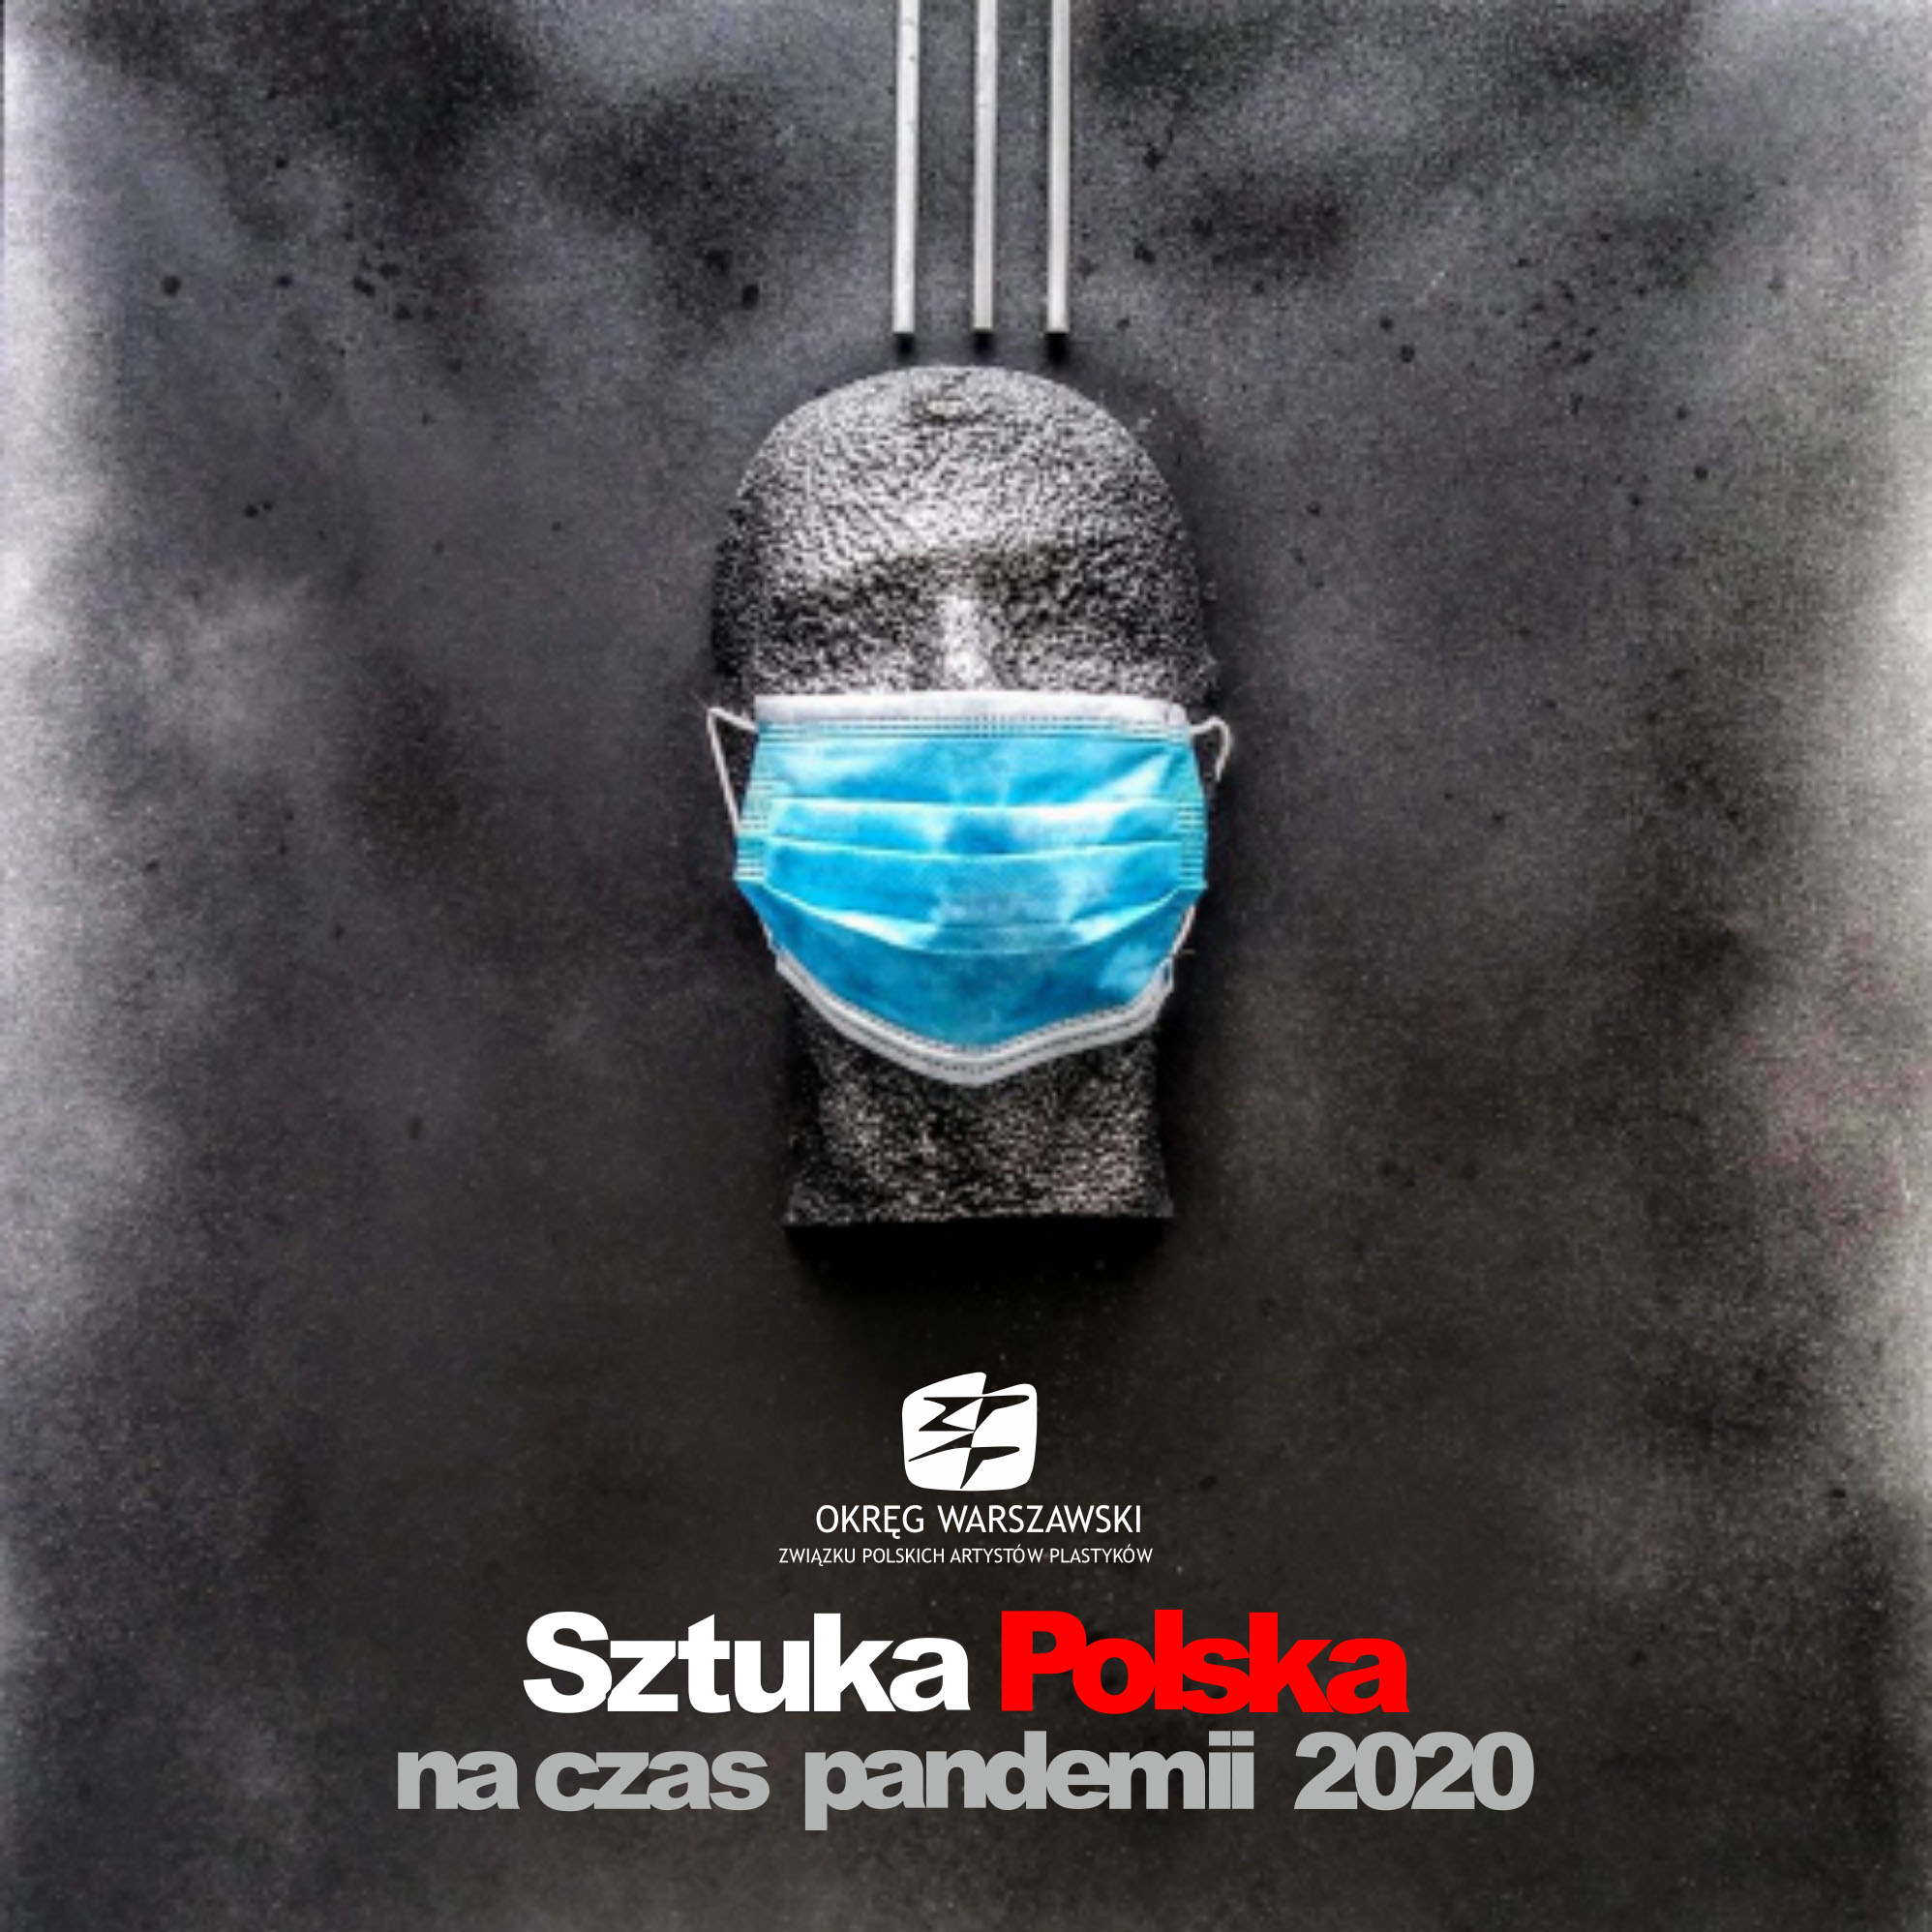 Sztuka polska na czas pandemii